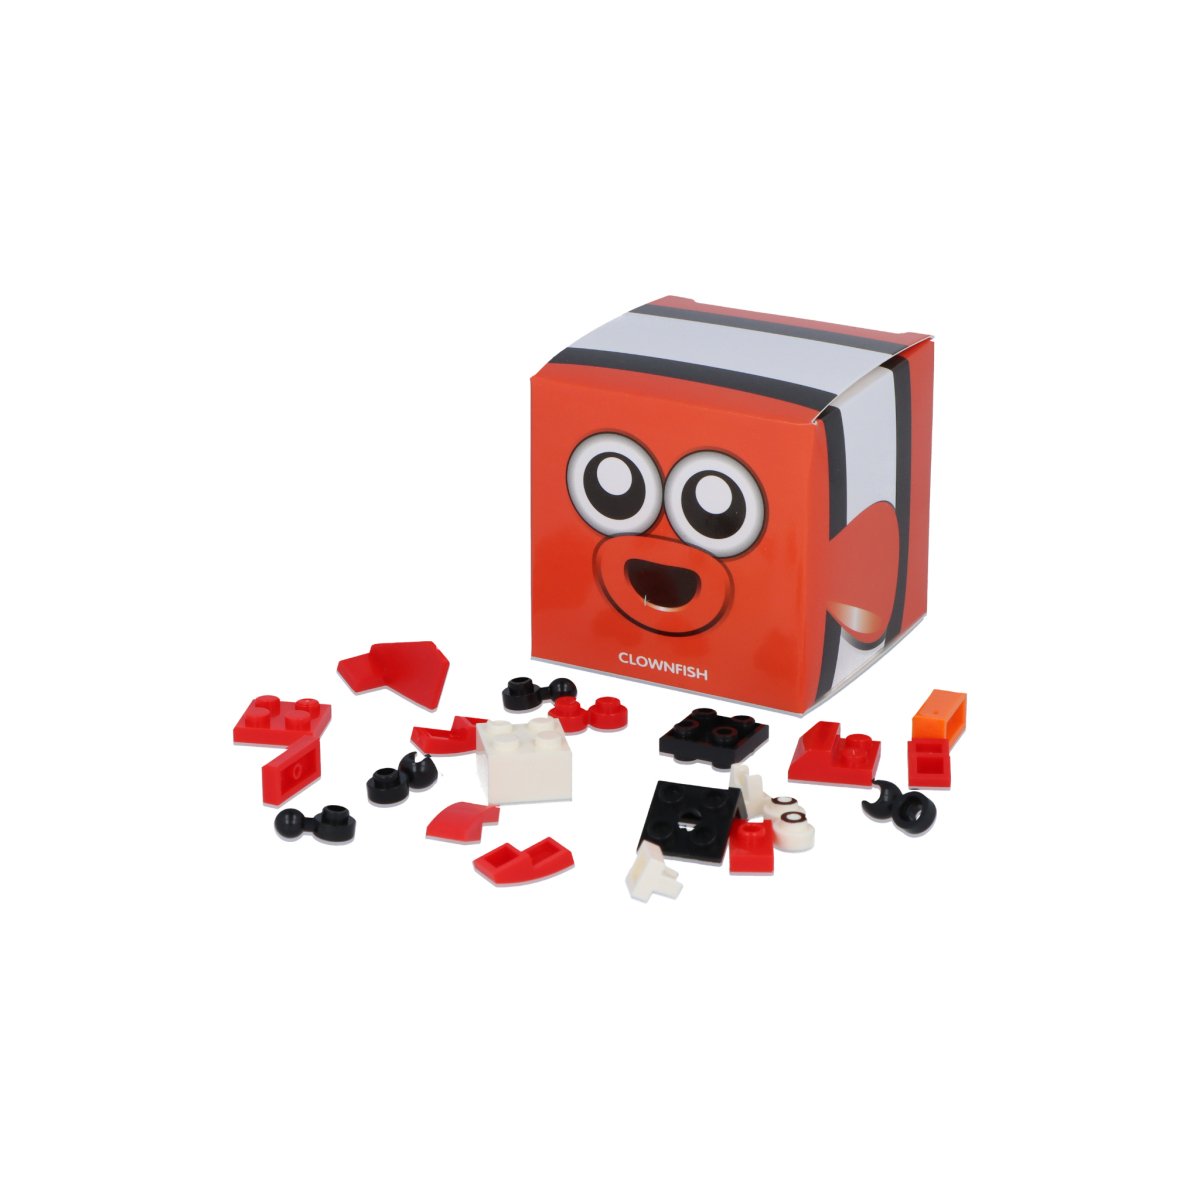 Sealife Brick Kits - Kids Party Craft